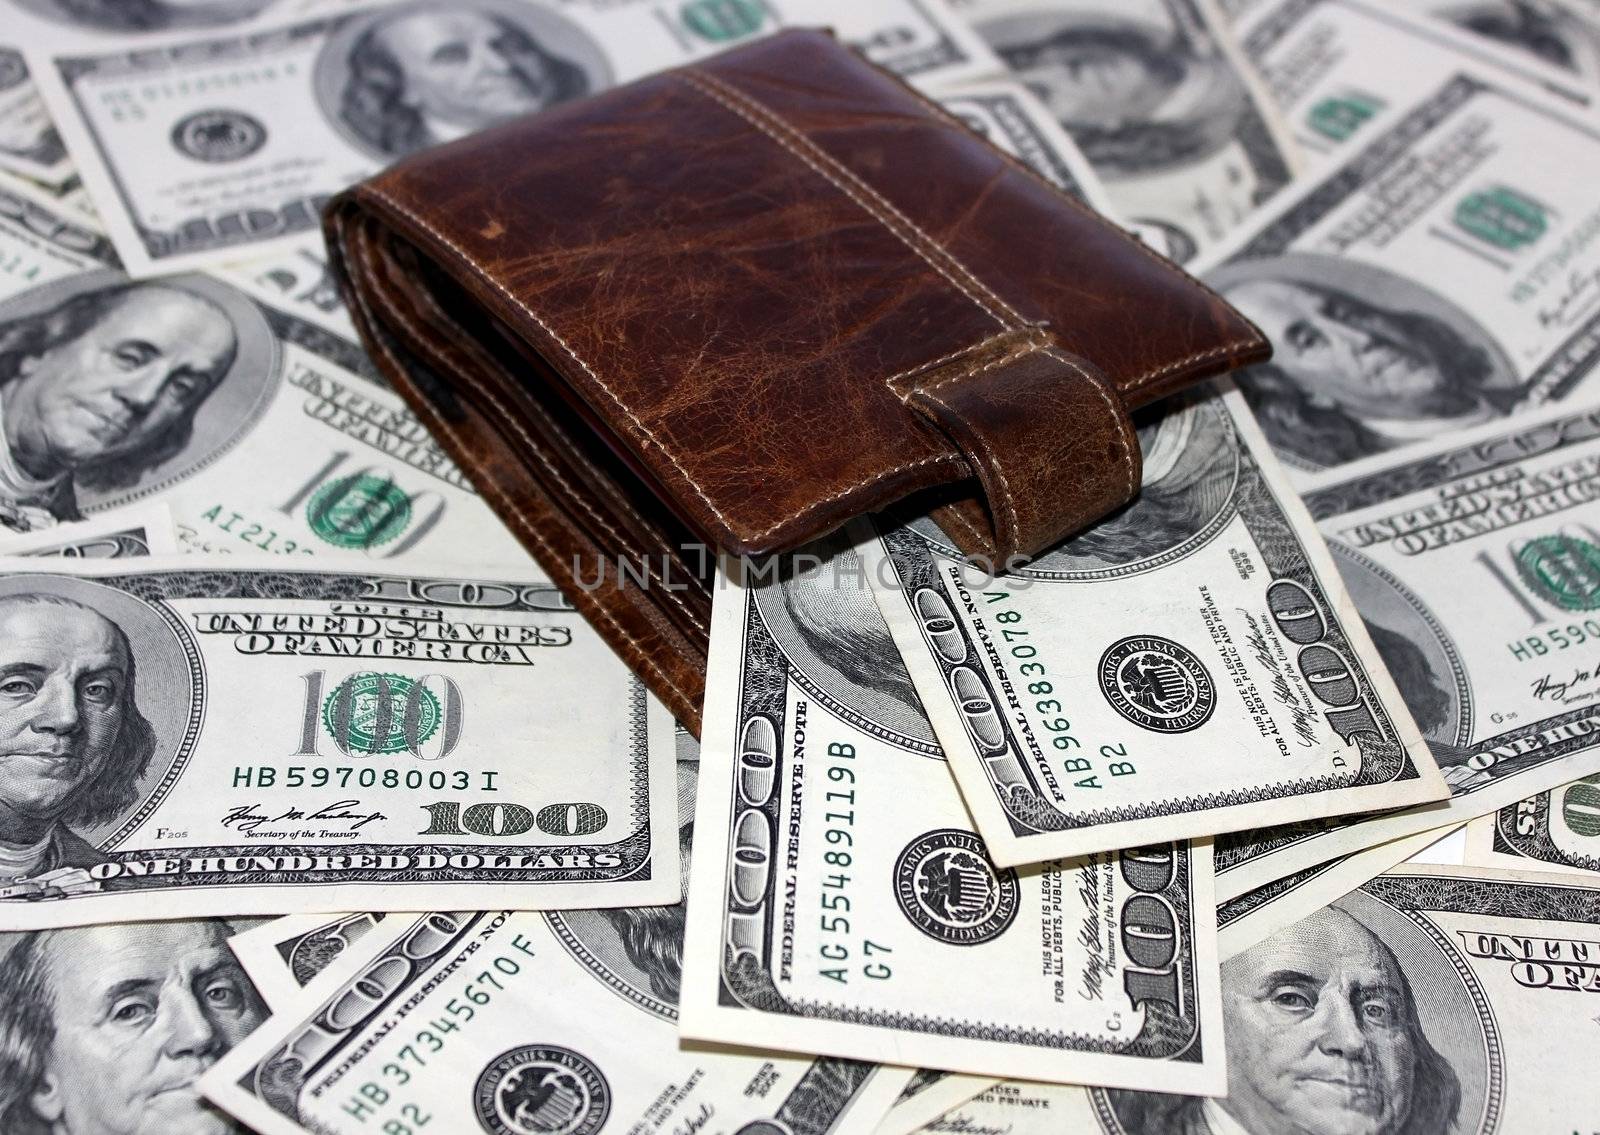 leather purse lying among the one hundred dollar notes on white background